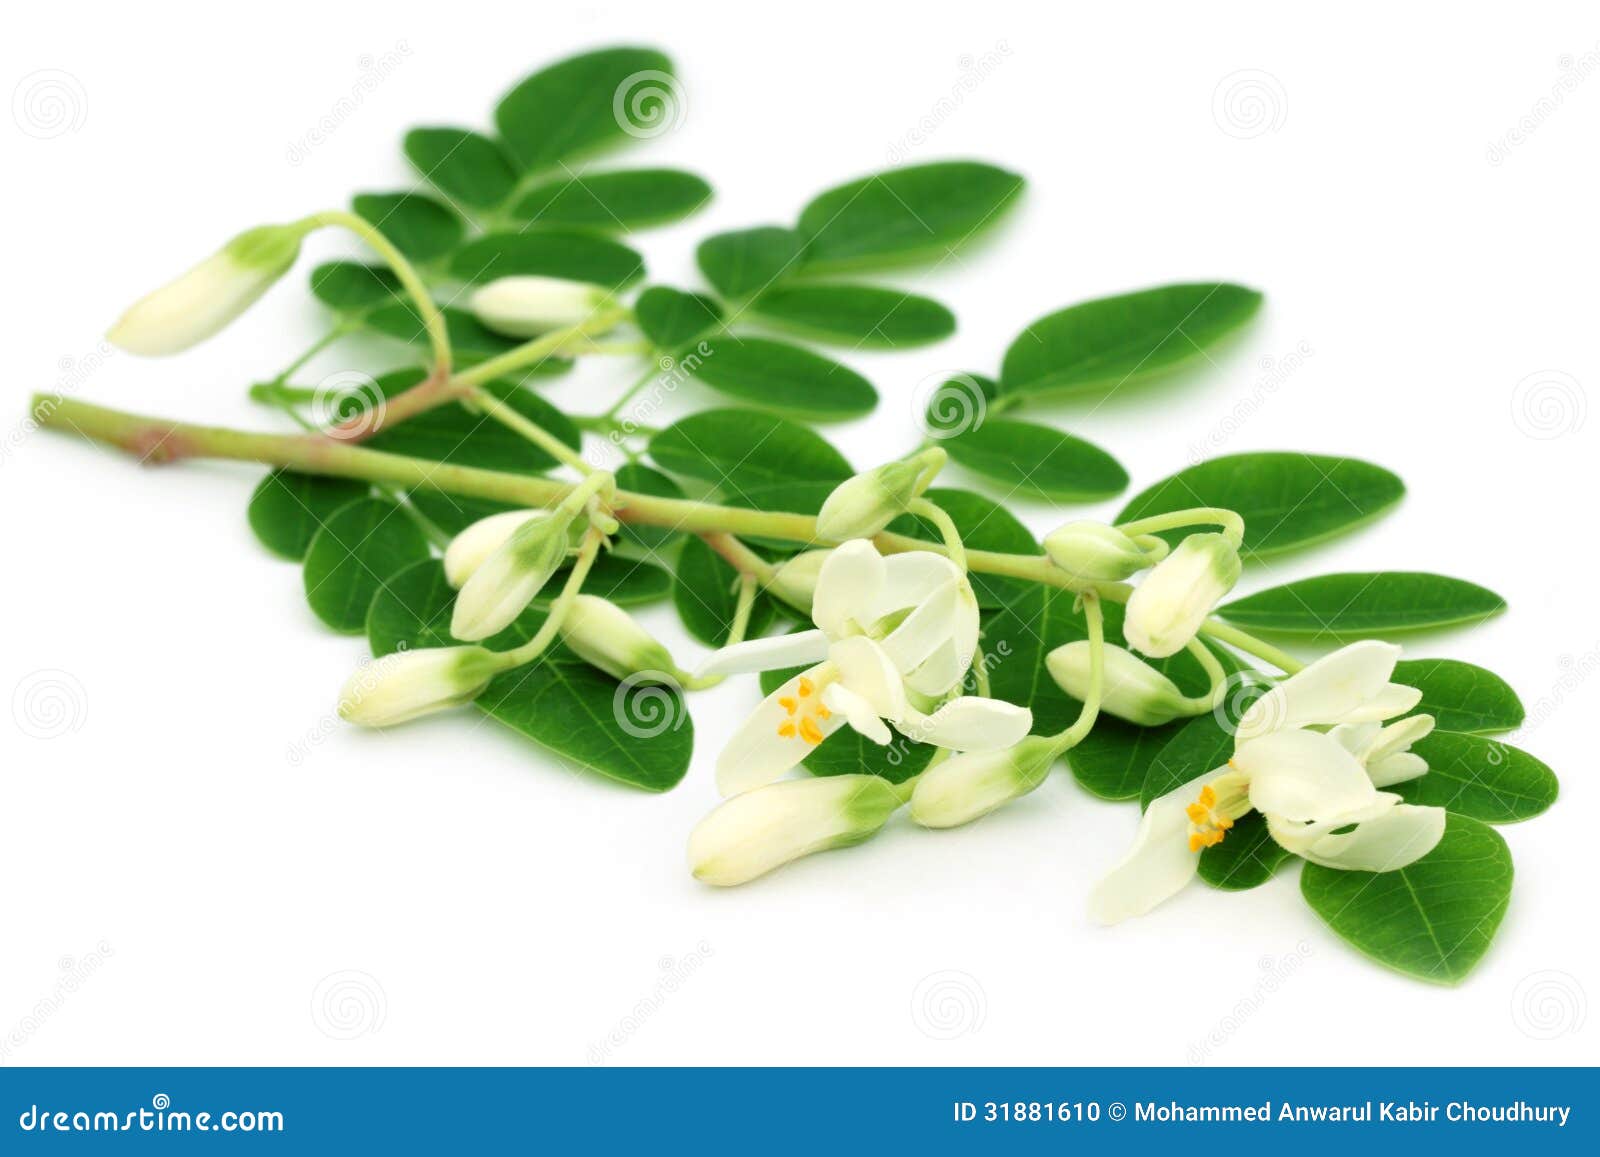 edible moringa leaves with flower